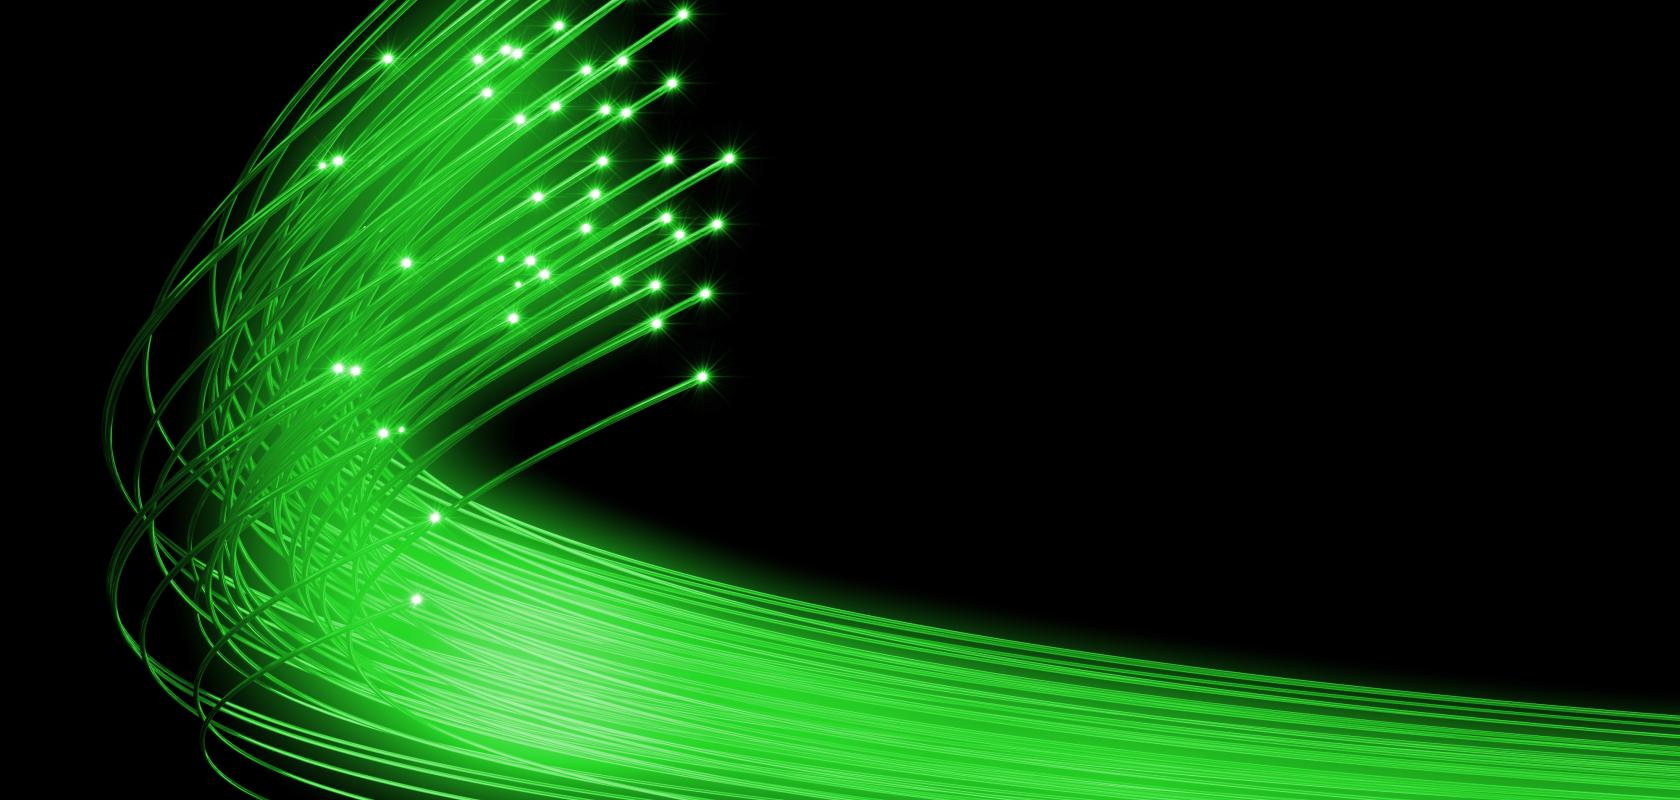 Optical fibre can help operators unlock network sustainability